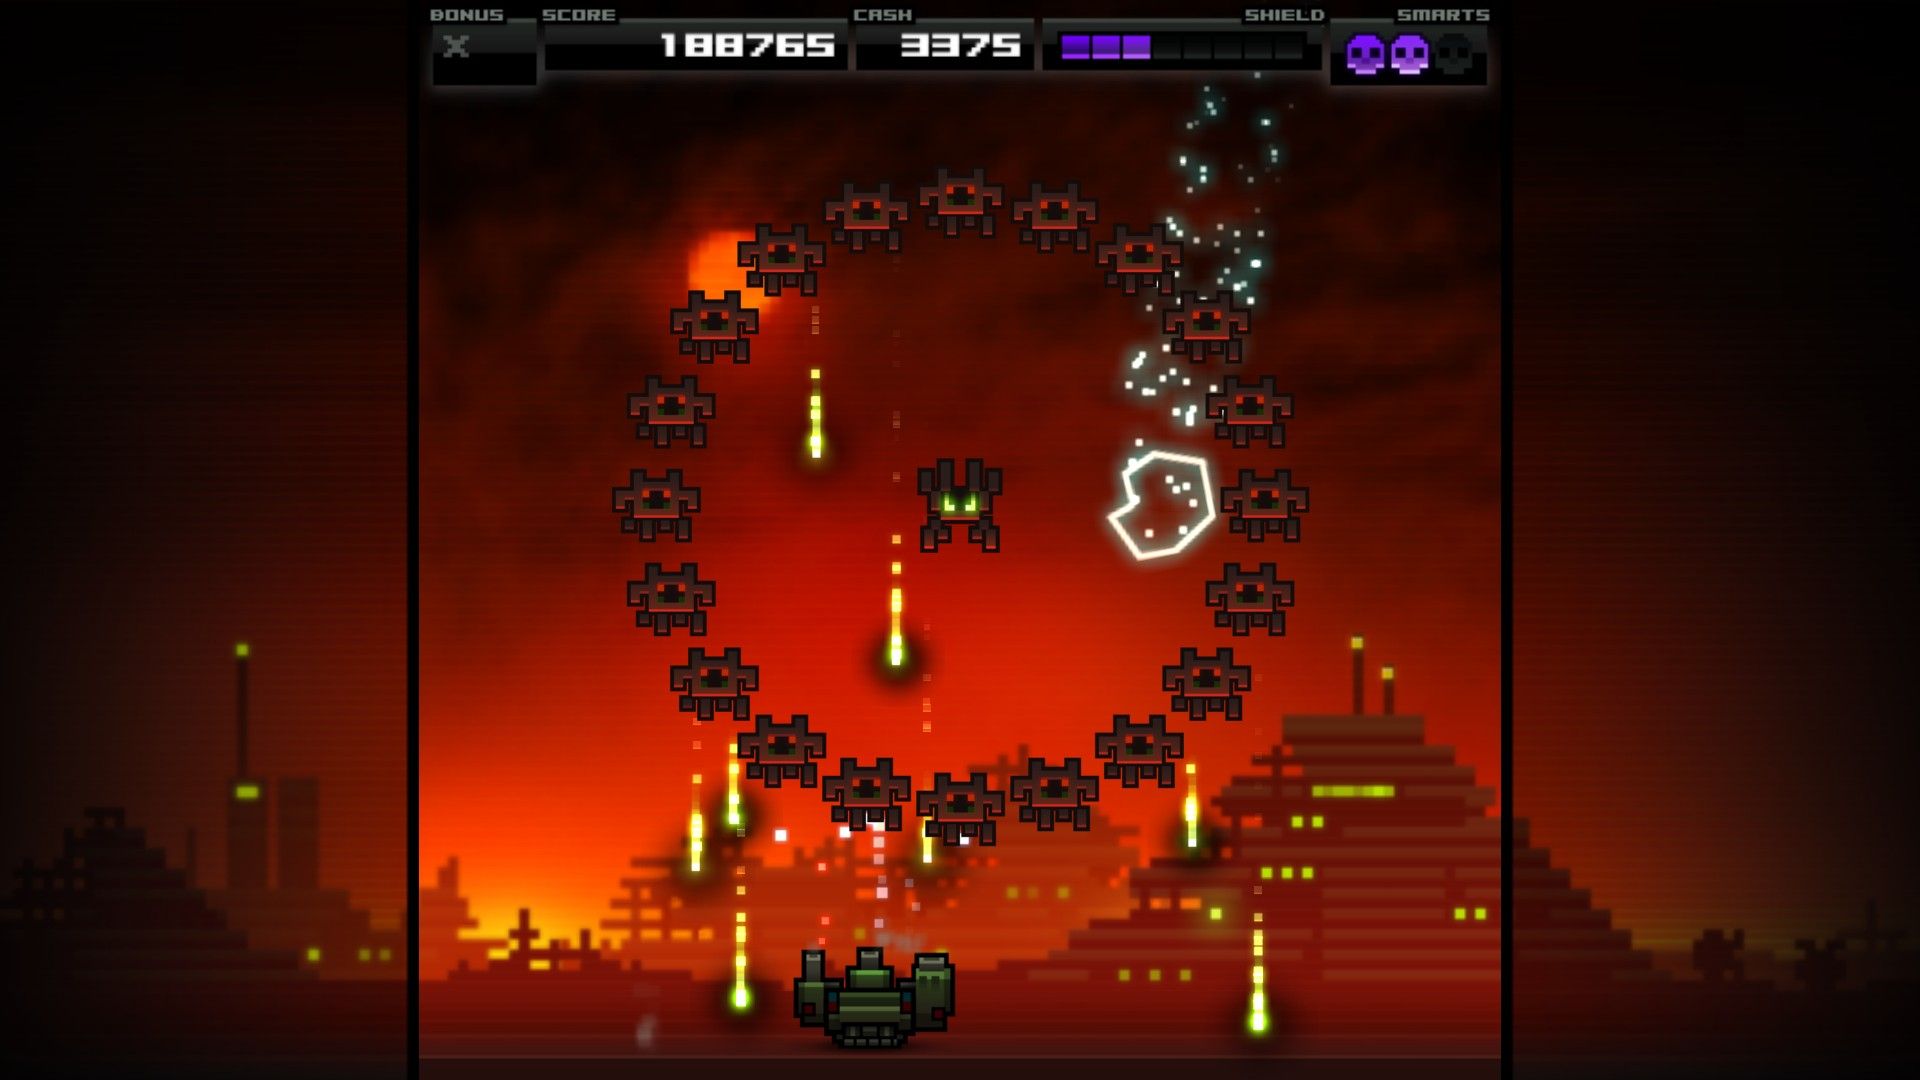 Titan Attacks screenshot